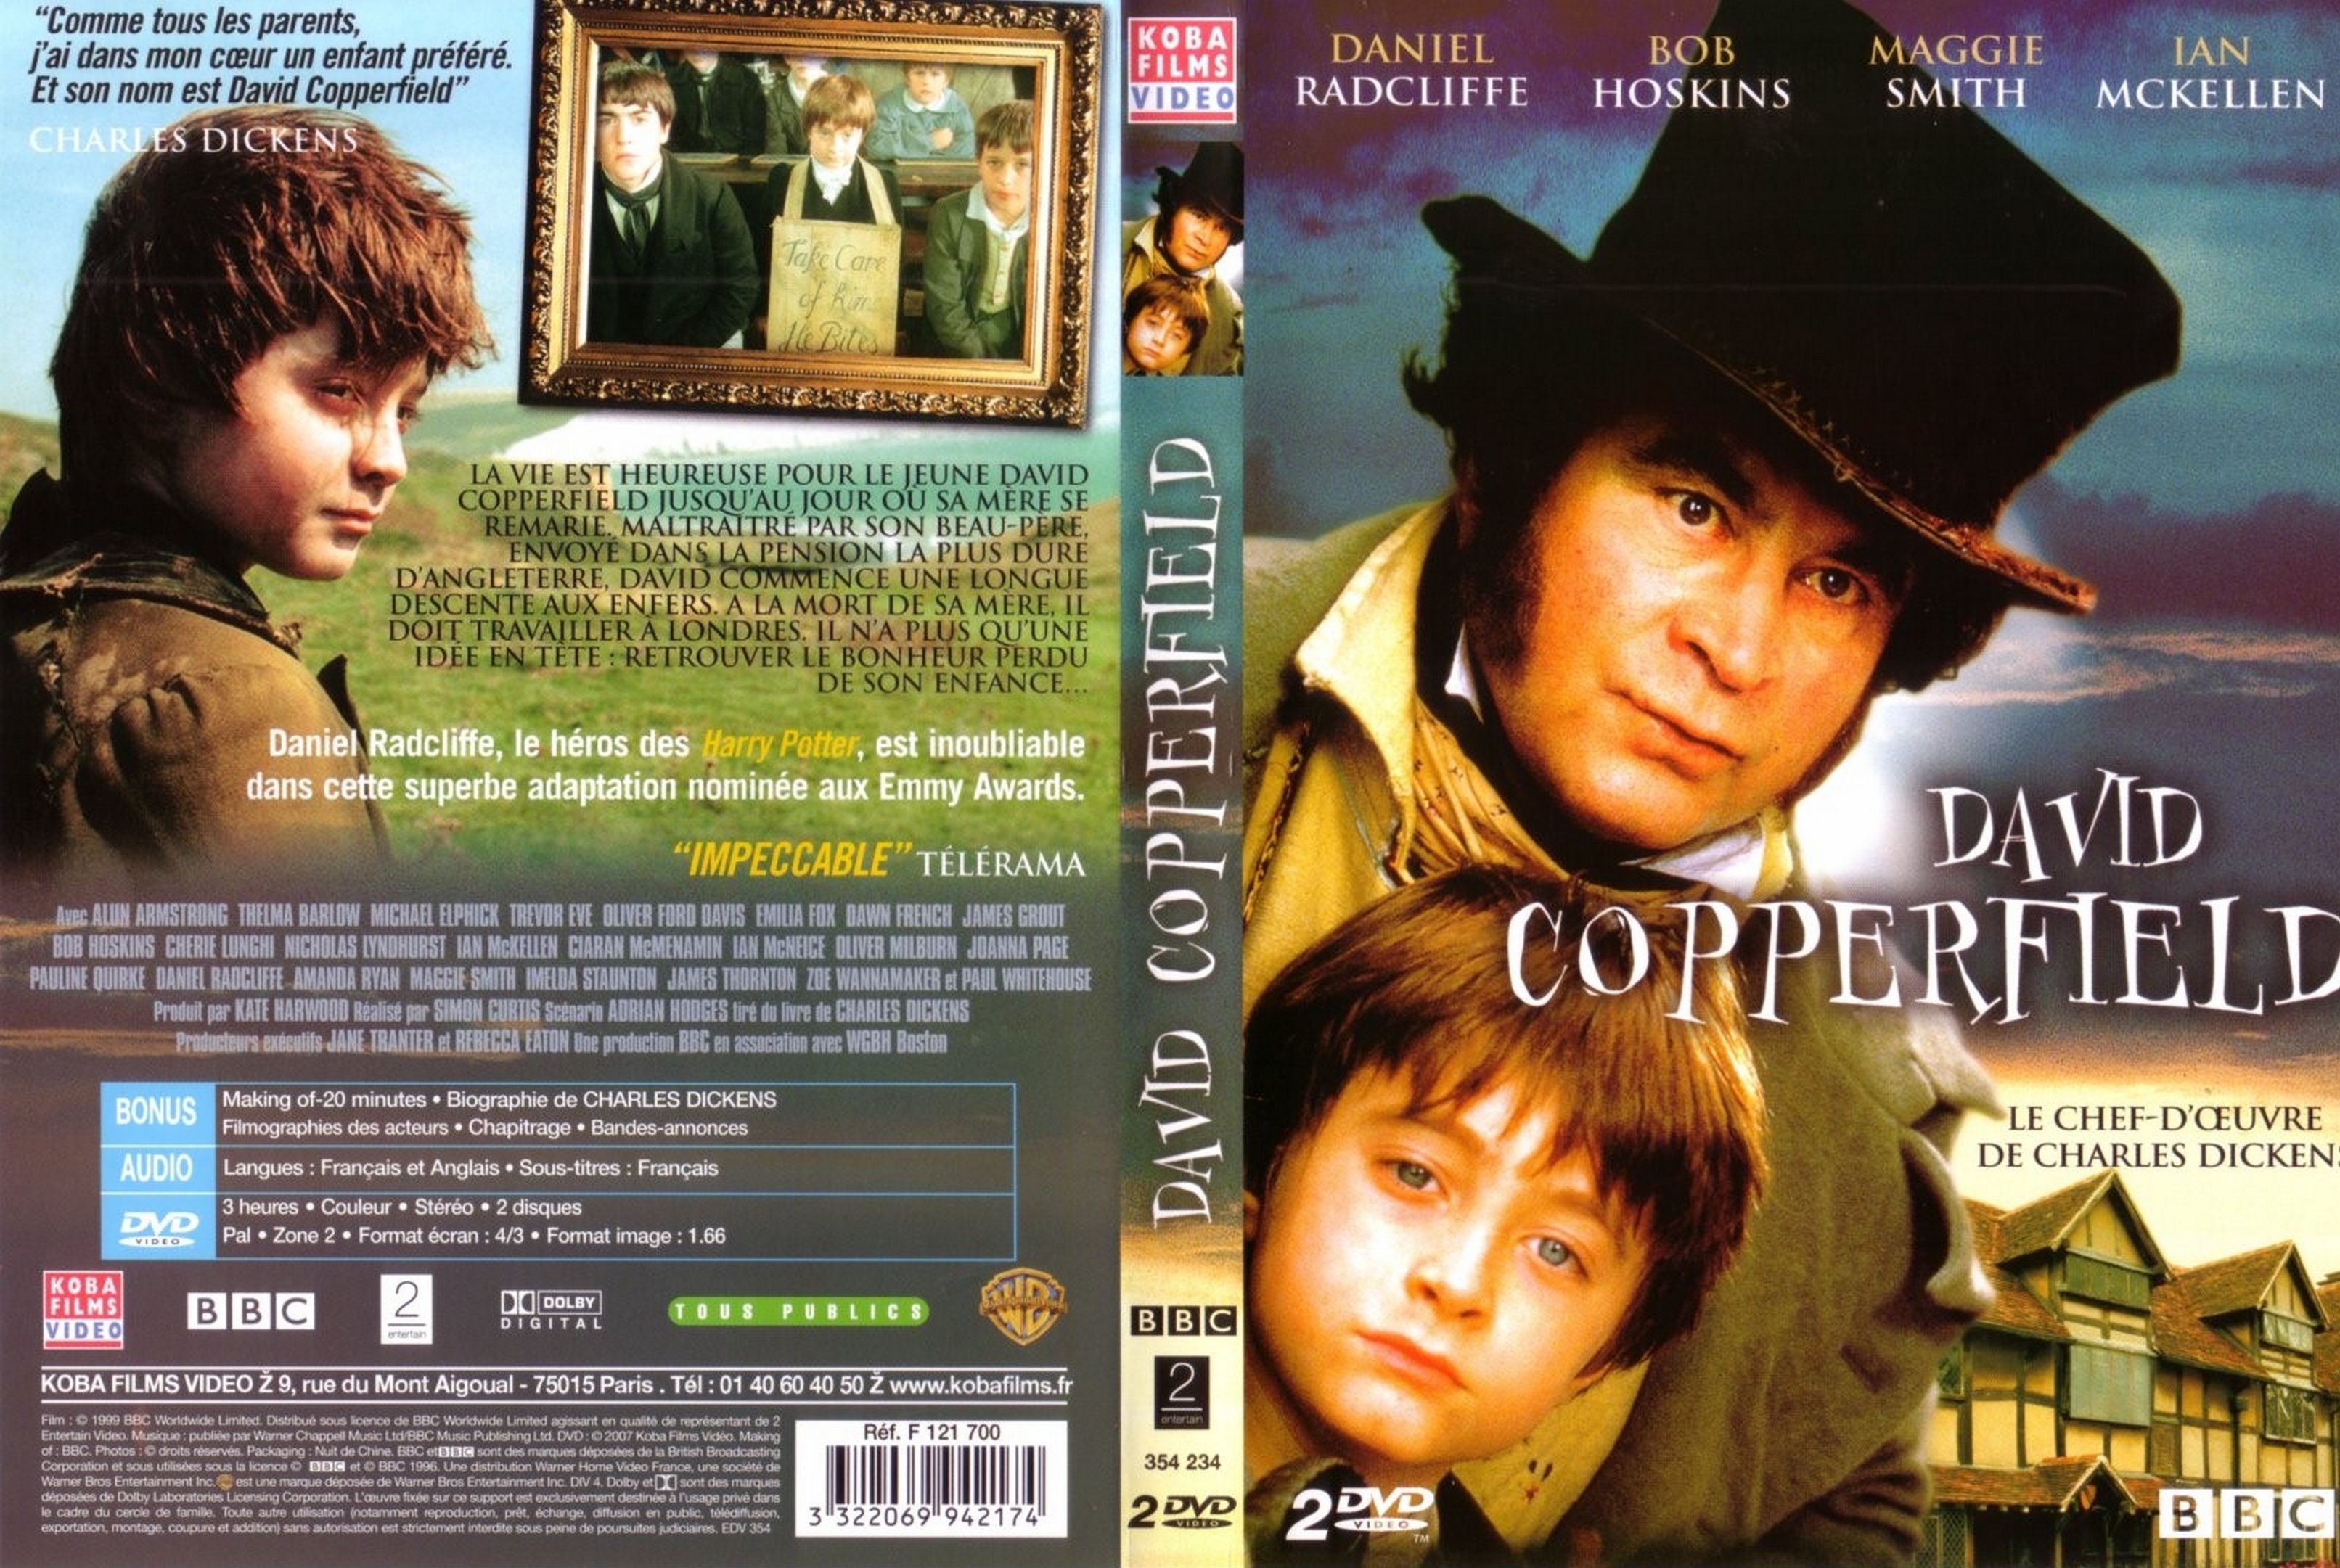 Jaquette DVD David Copperfield